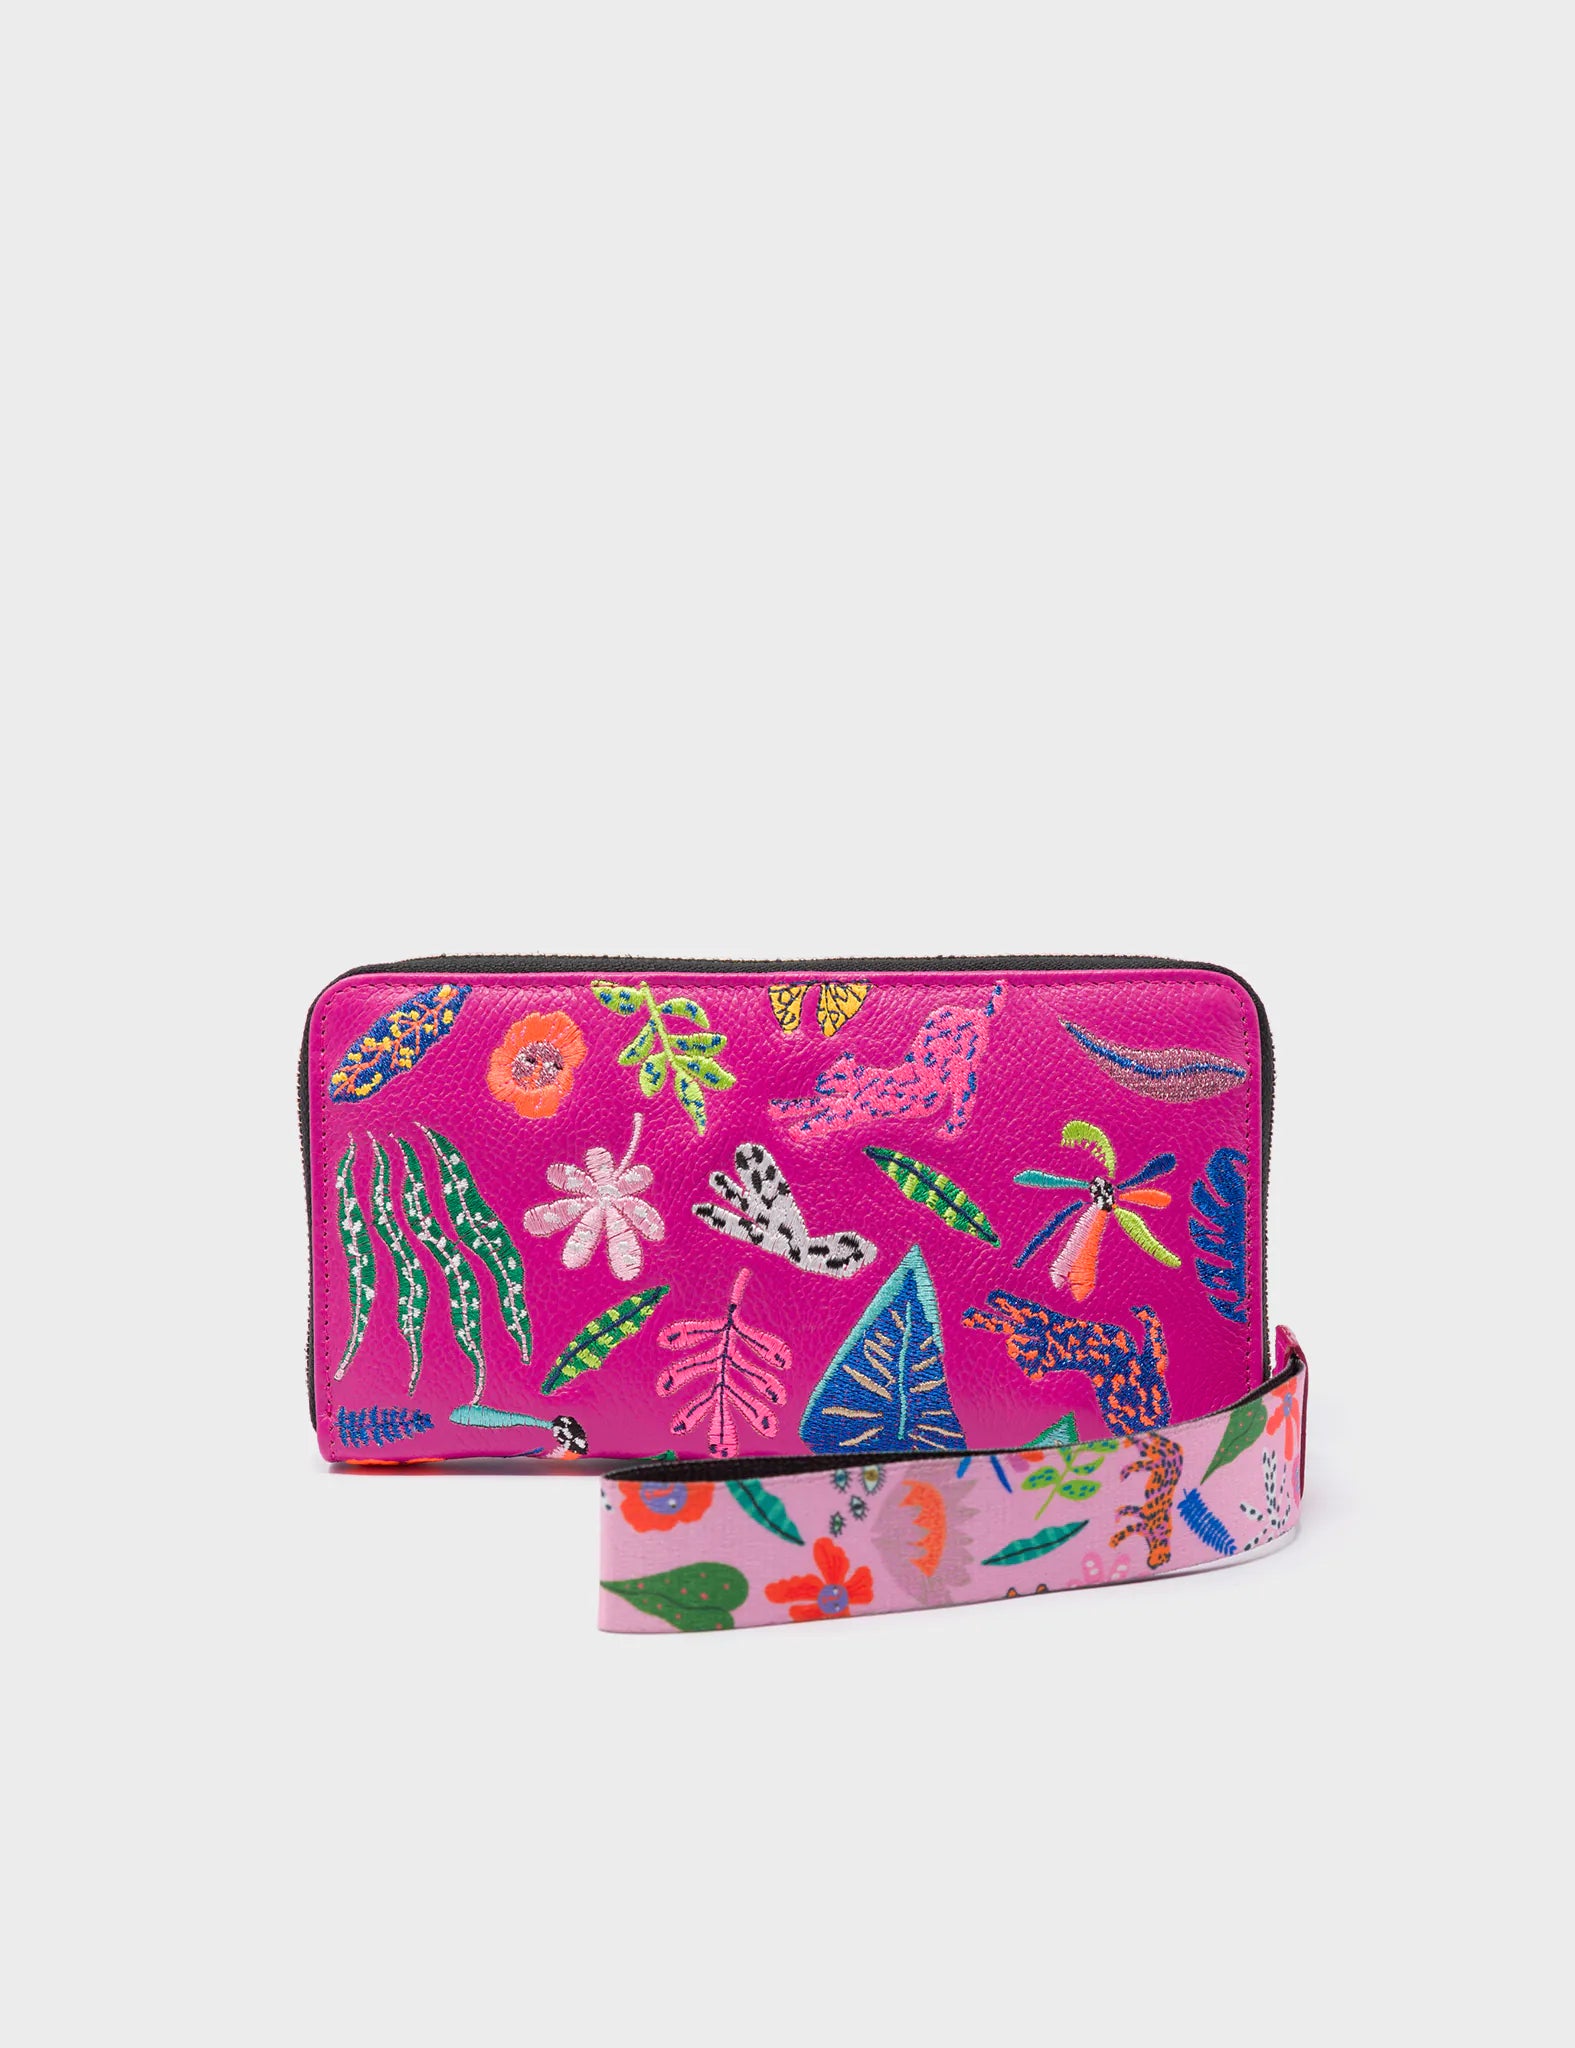 Francis Violet Leather Wallet - El Trópico Embroidery Design - Back 